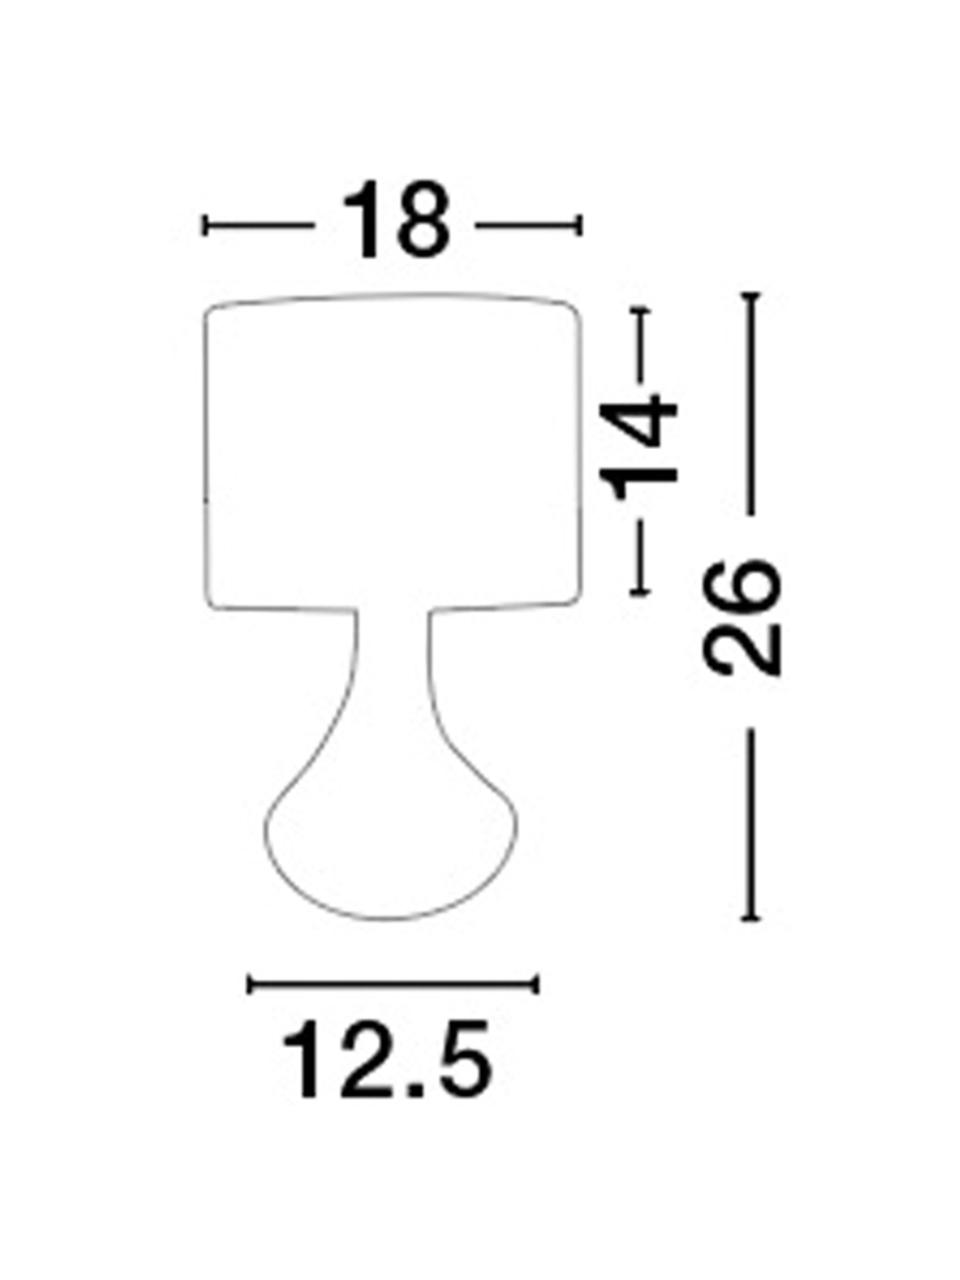 Tafellamp Rosia, Lampenkap: polyester, Lampvoet: gelakt metaal, Grijs, Ø 18 x H 26 cm